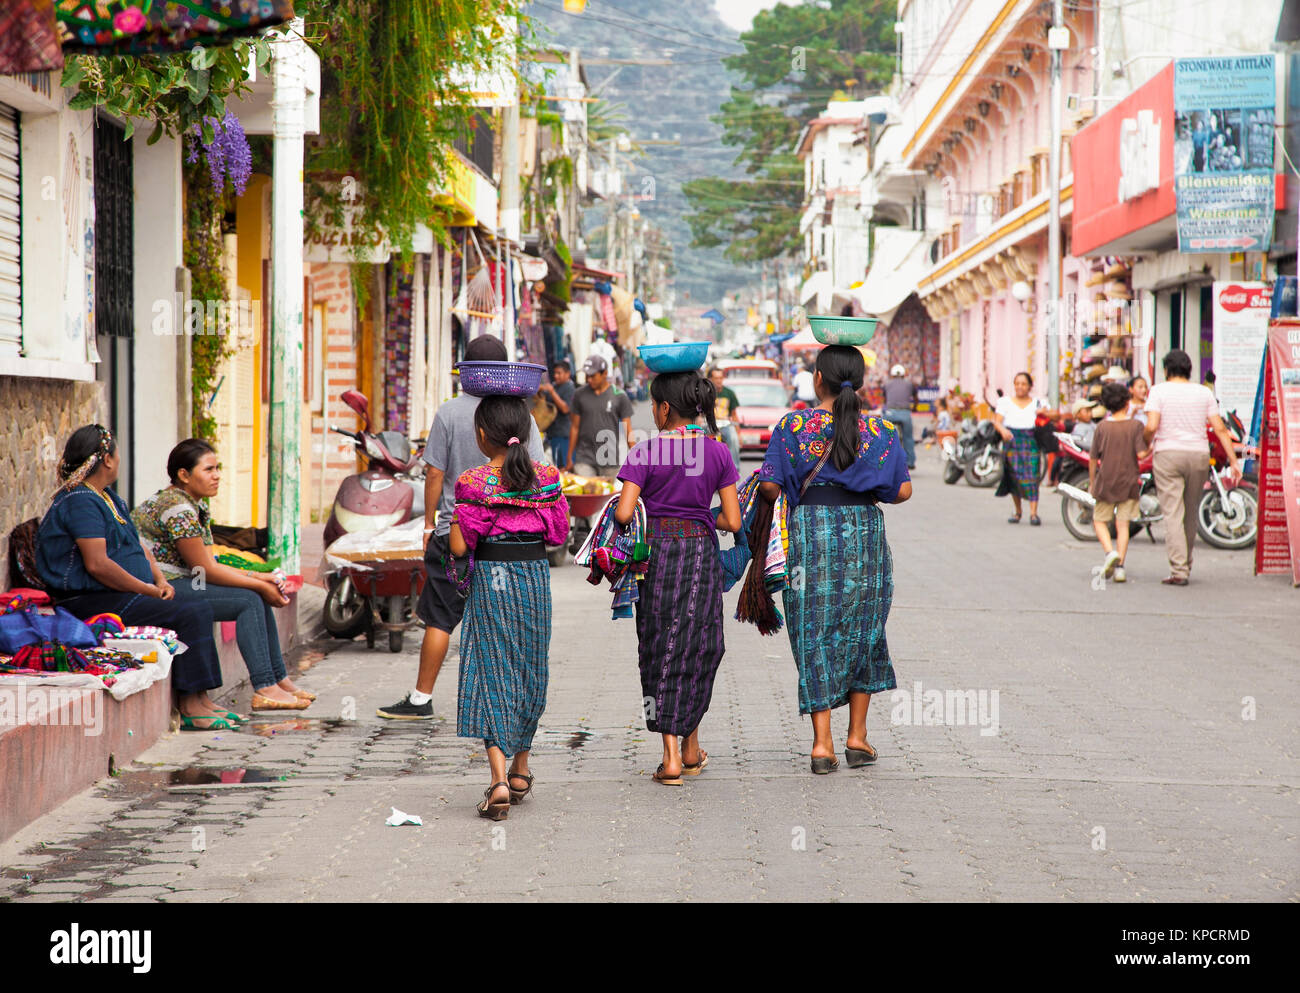 PANAJACHEL, GUATEMALA - Dec 24, 2015 :: Baum guatamalian junge Mädchen salling Traditionelle bunte Gewebe an der Straße Markt in Panajachel, am 24.Dezember Stockfoto